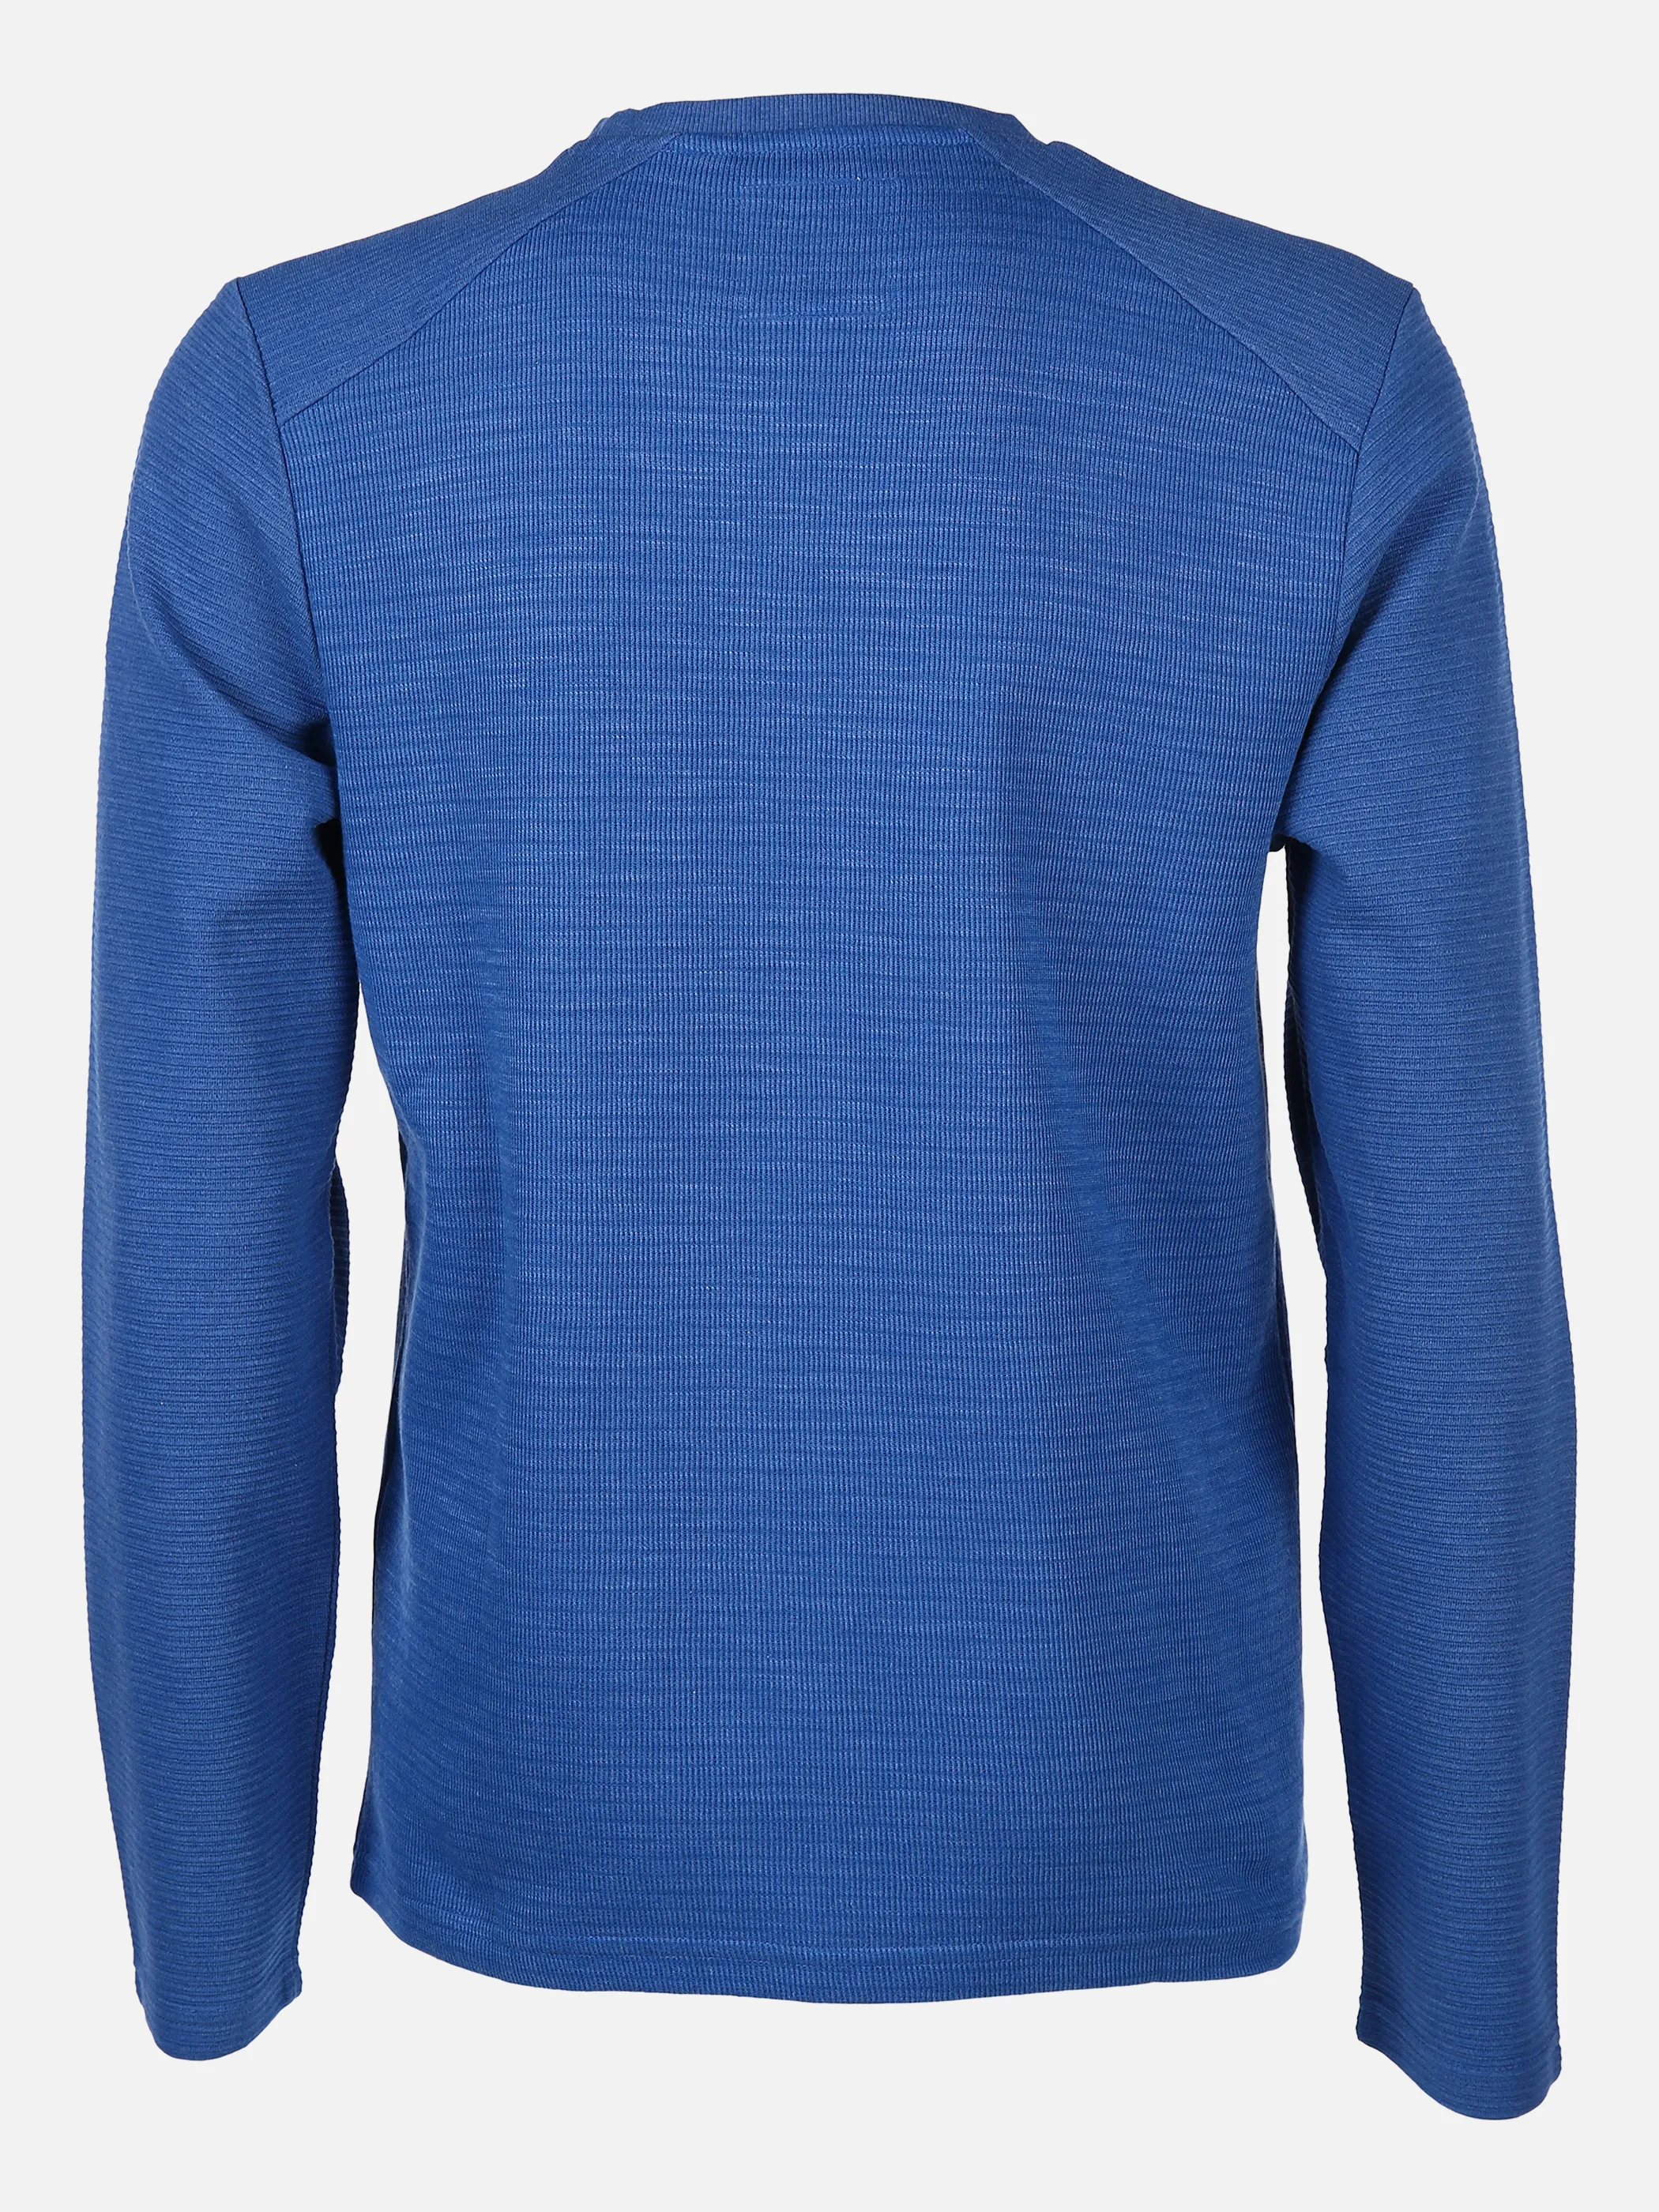 Tom Tailor 1015016 fabric mix sweatshirt Blau 833023 20480 2